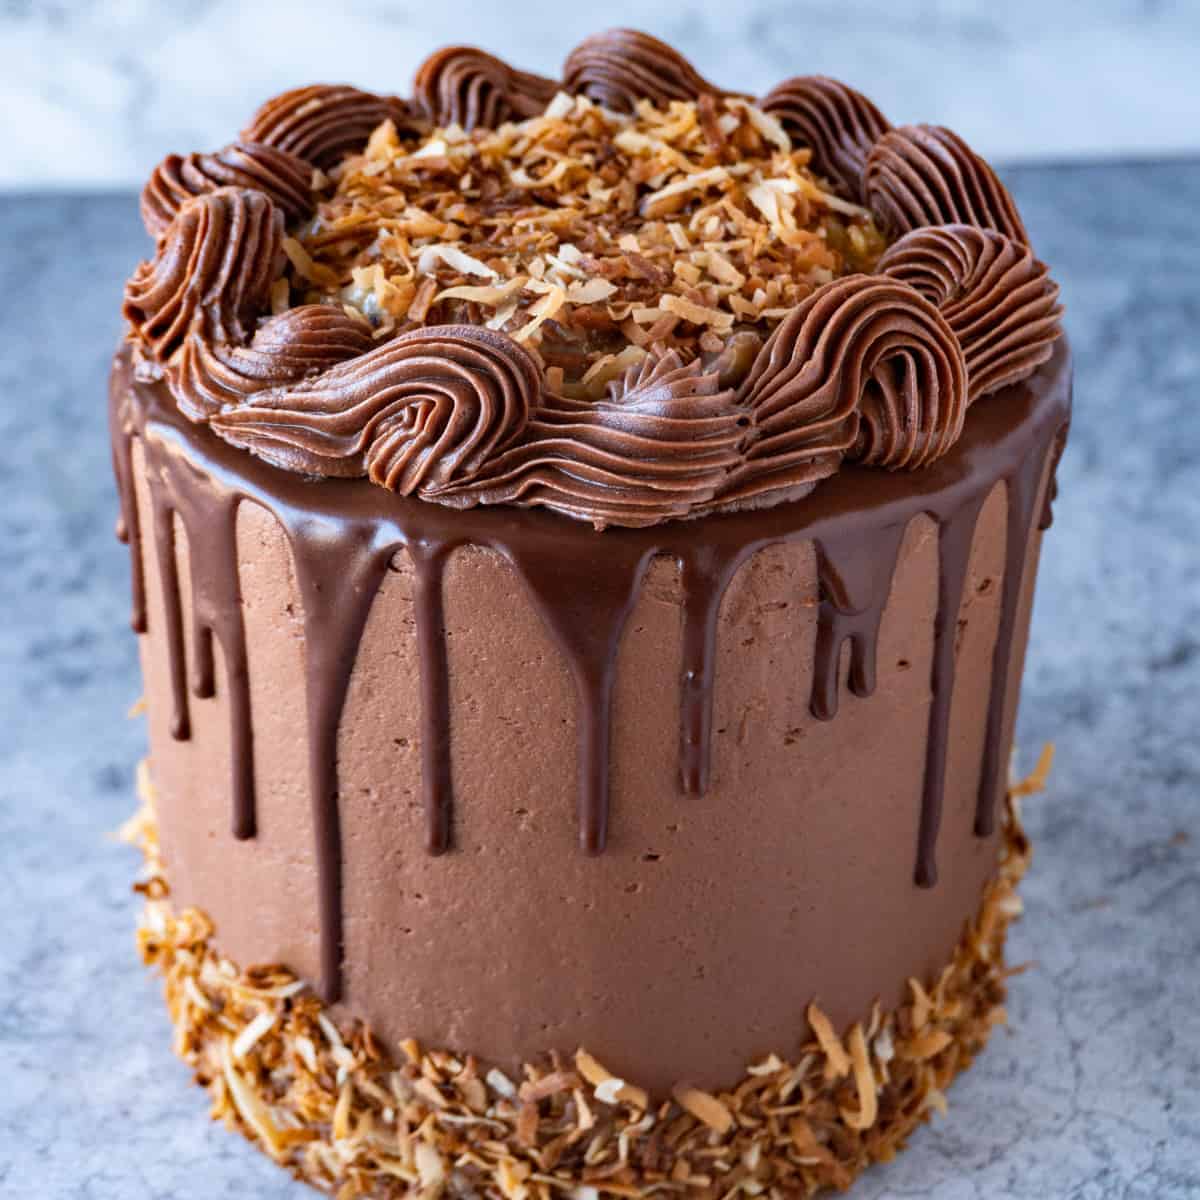 German Chocolate Cake Recipe Featured Image